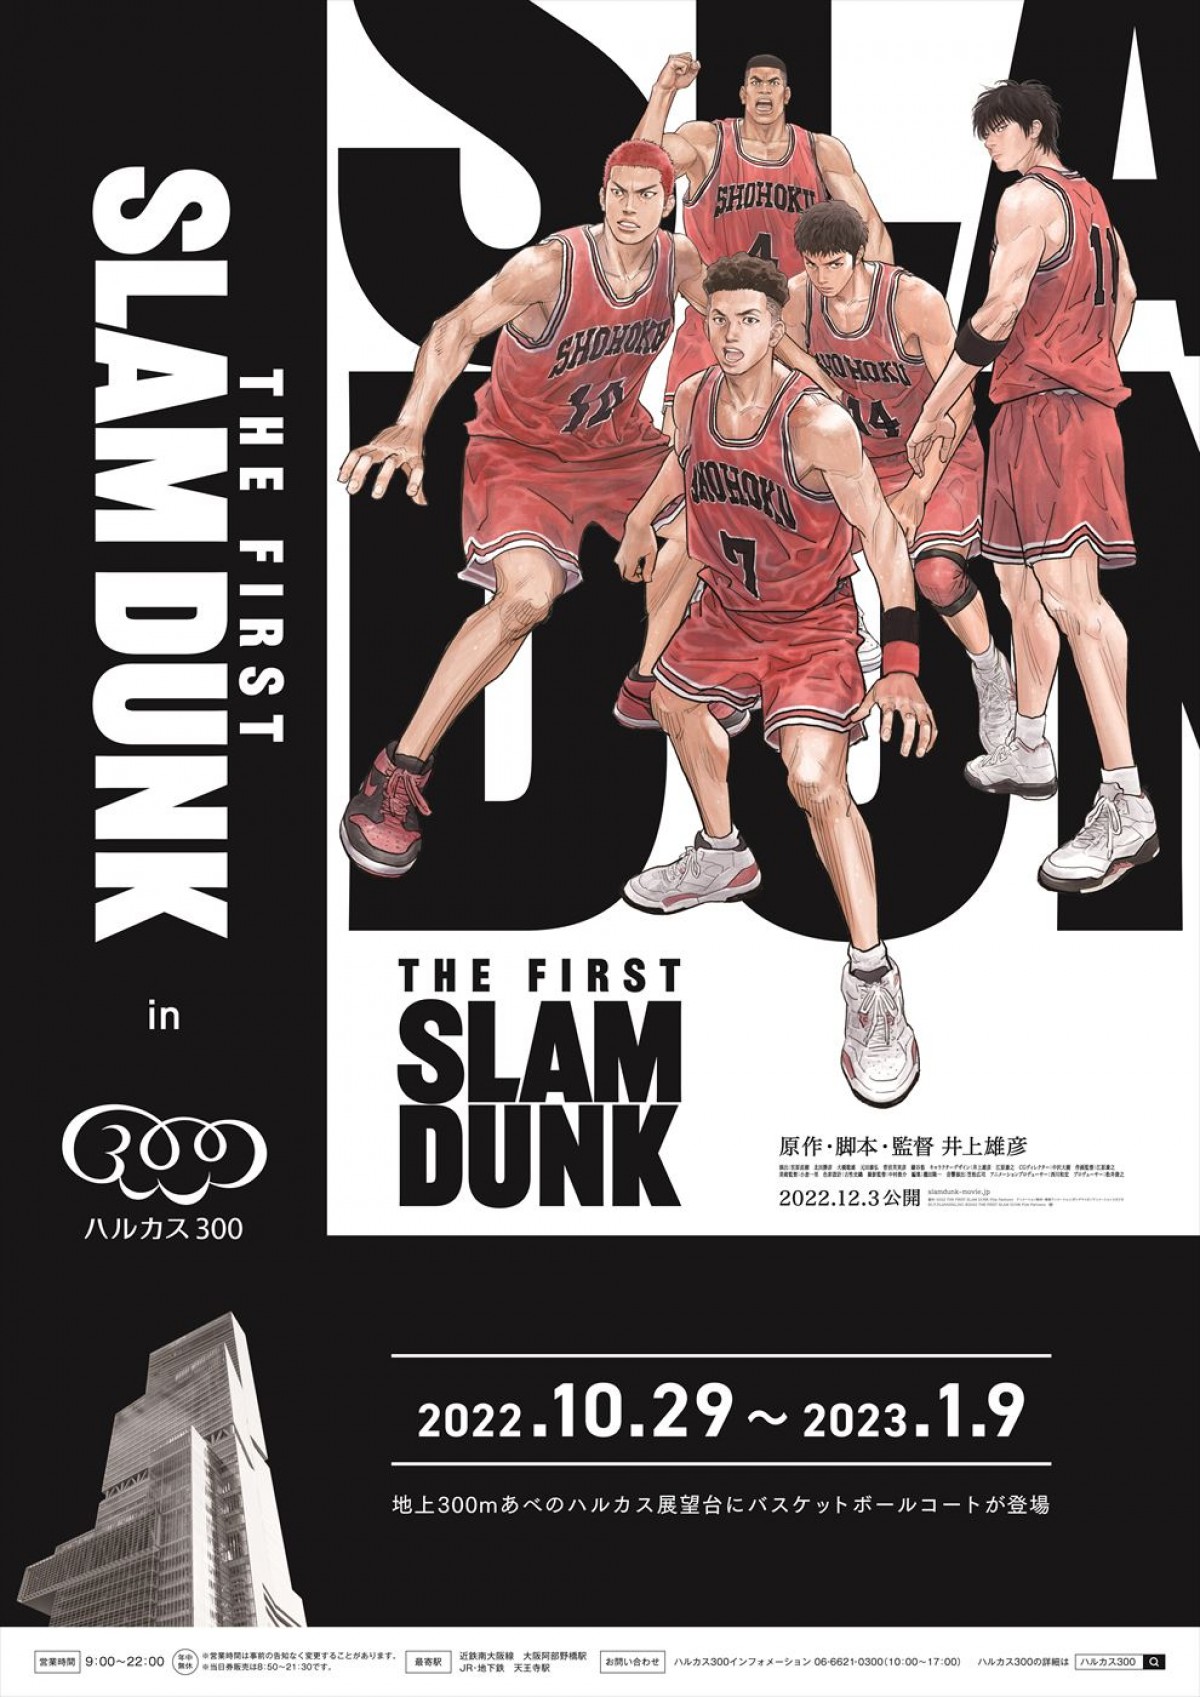 『THE FIRST SLAM DUNK』 in ハルカス300開催　あべのハルカス展望台にバスケットボールコートが登場